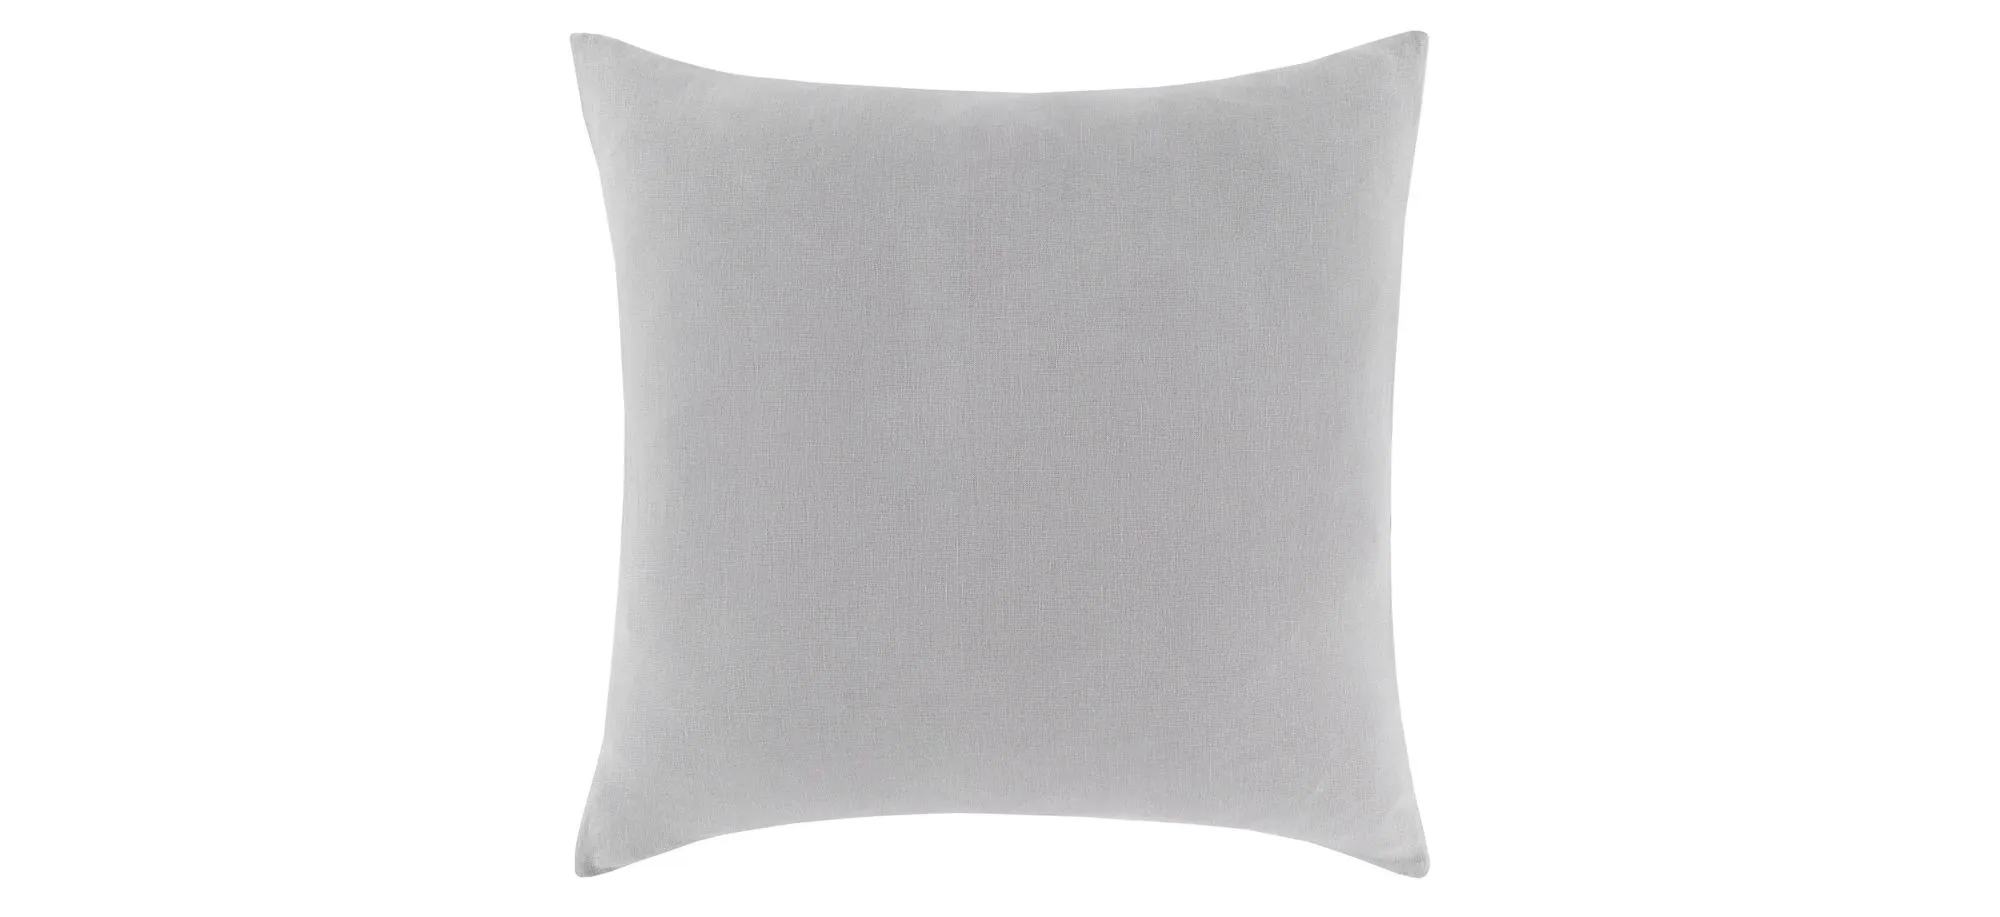 Dawson Throw Pillow in Gray by Surya